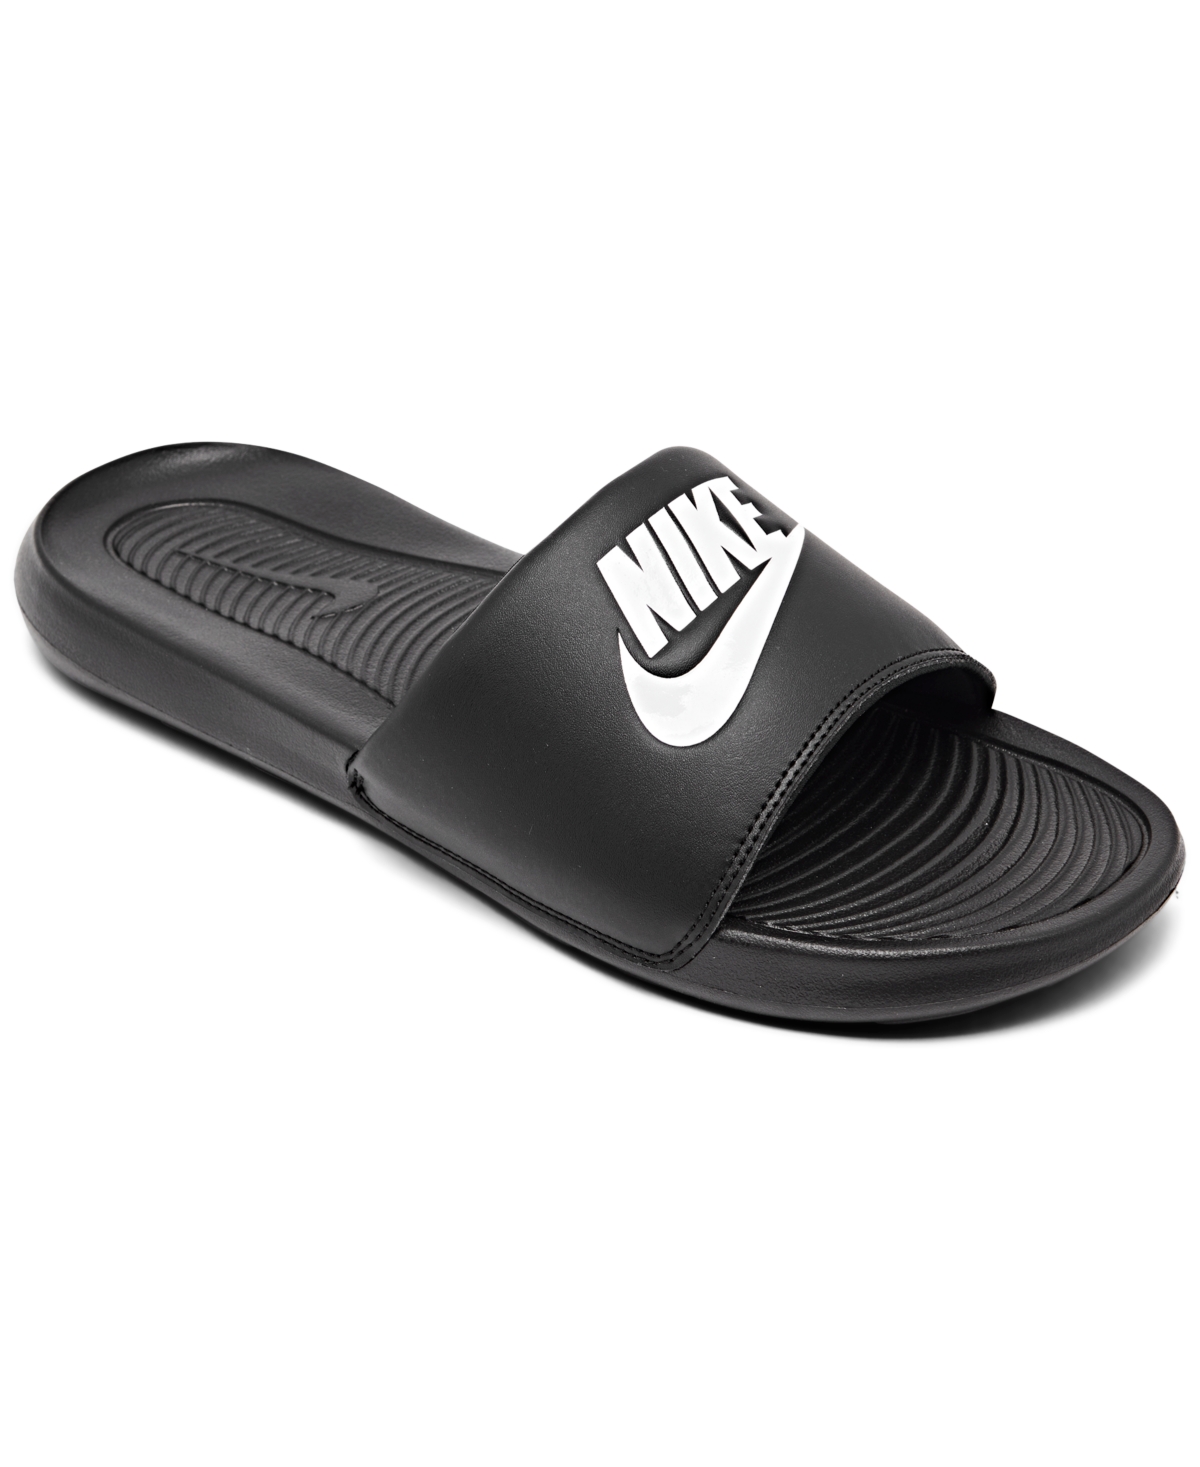 Men's Victori One Slide Sandals from Finish Line - Black, White